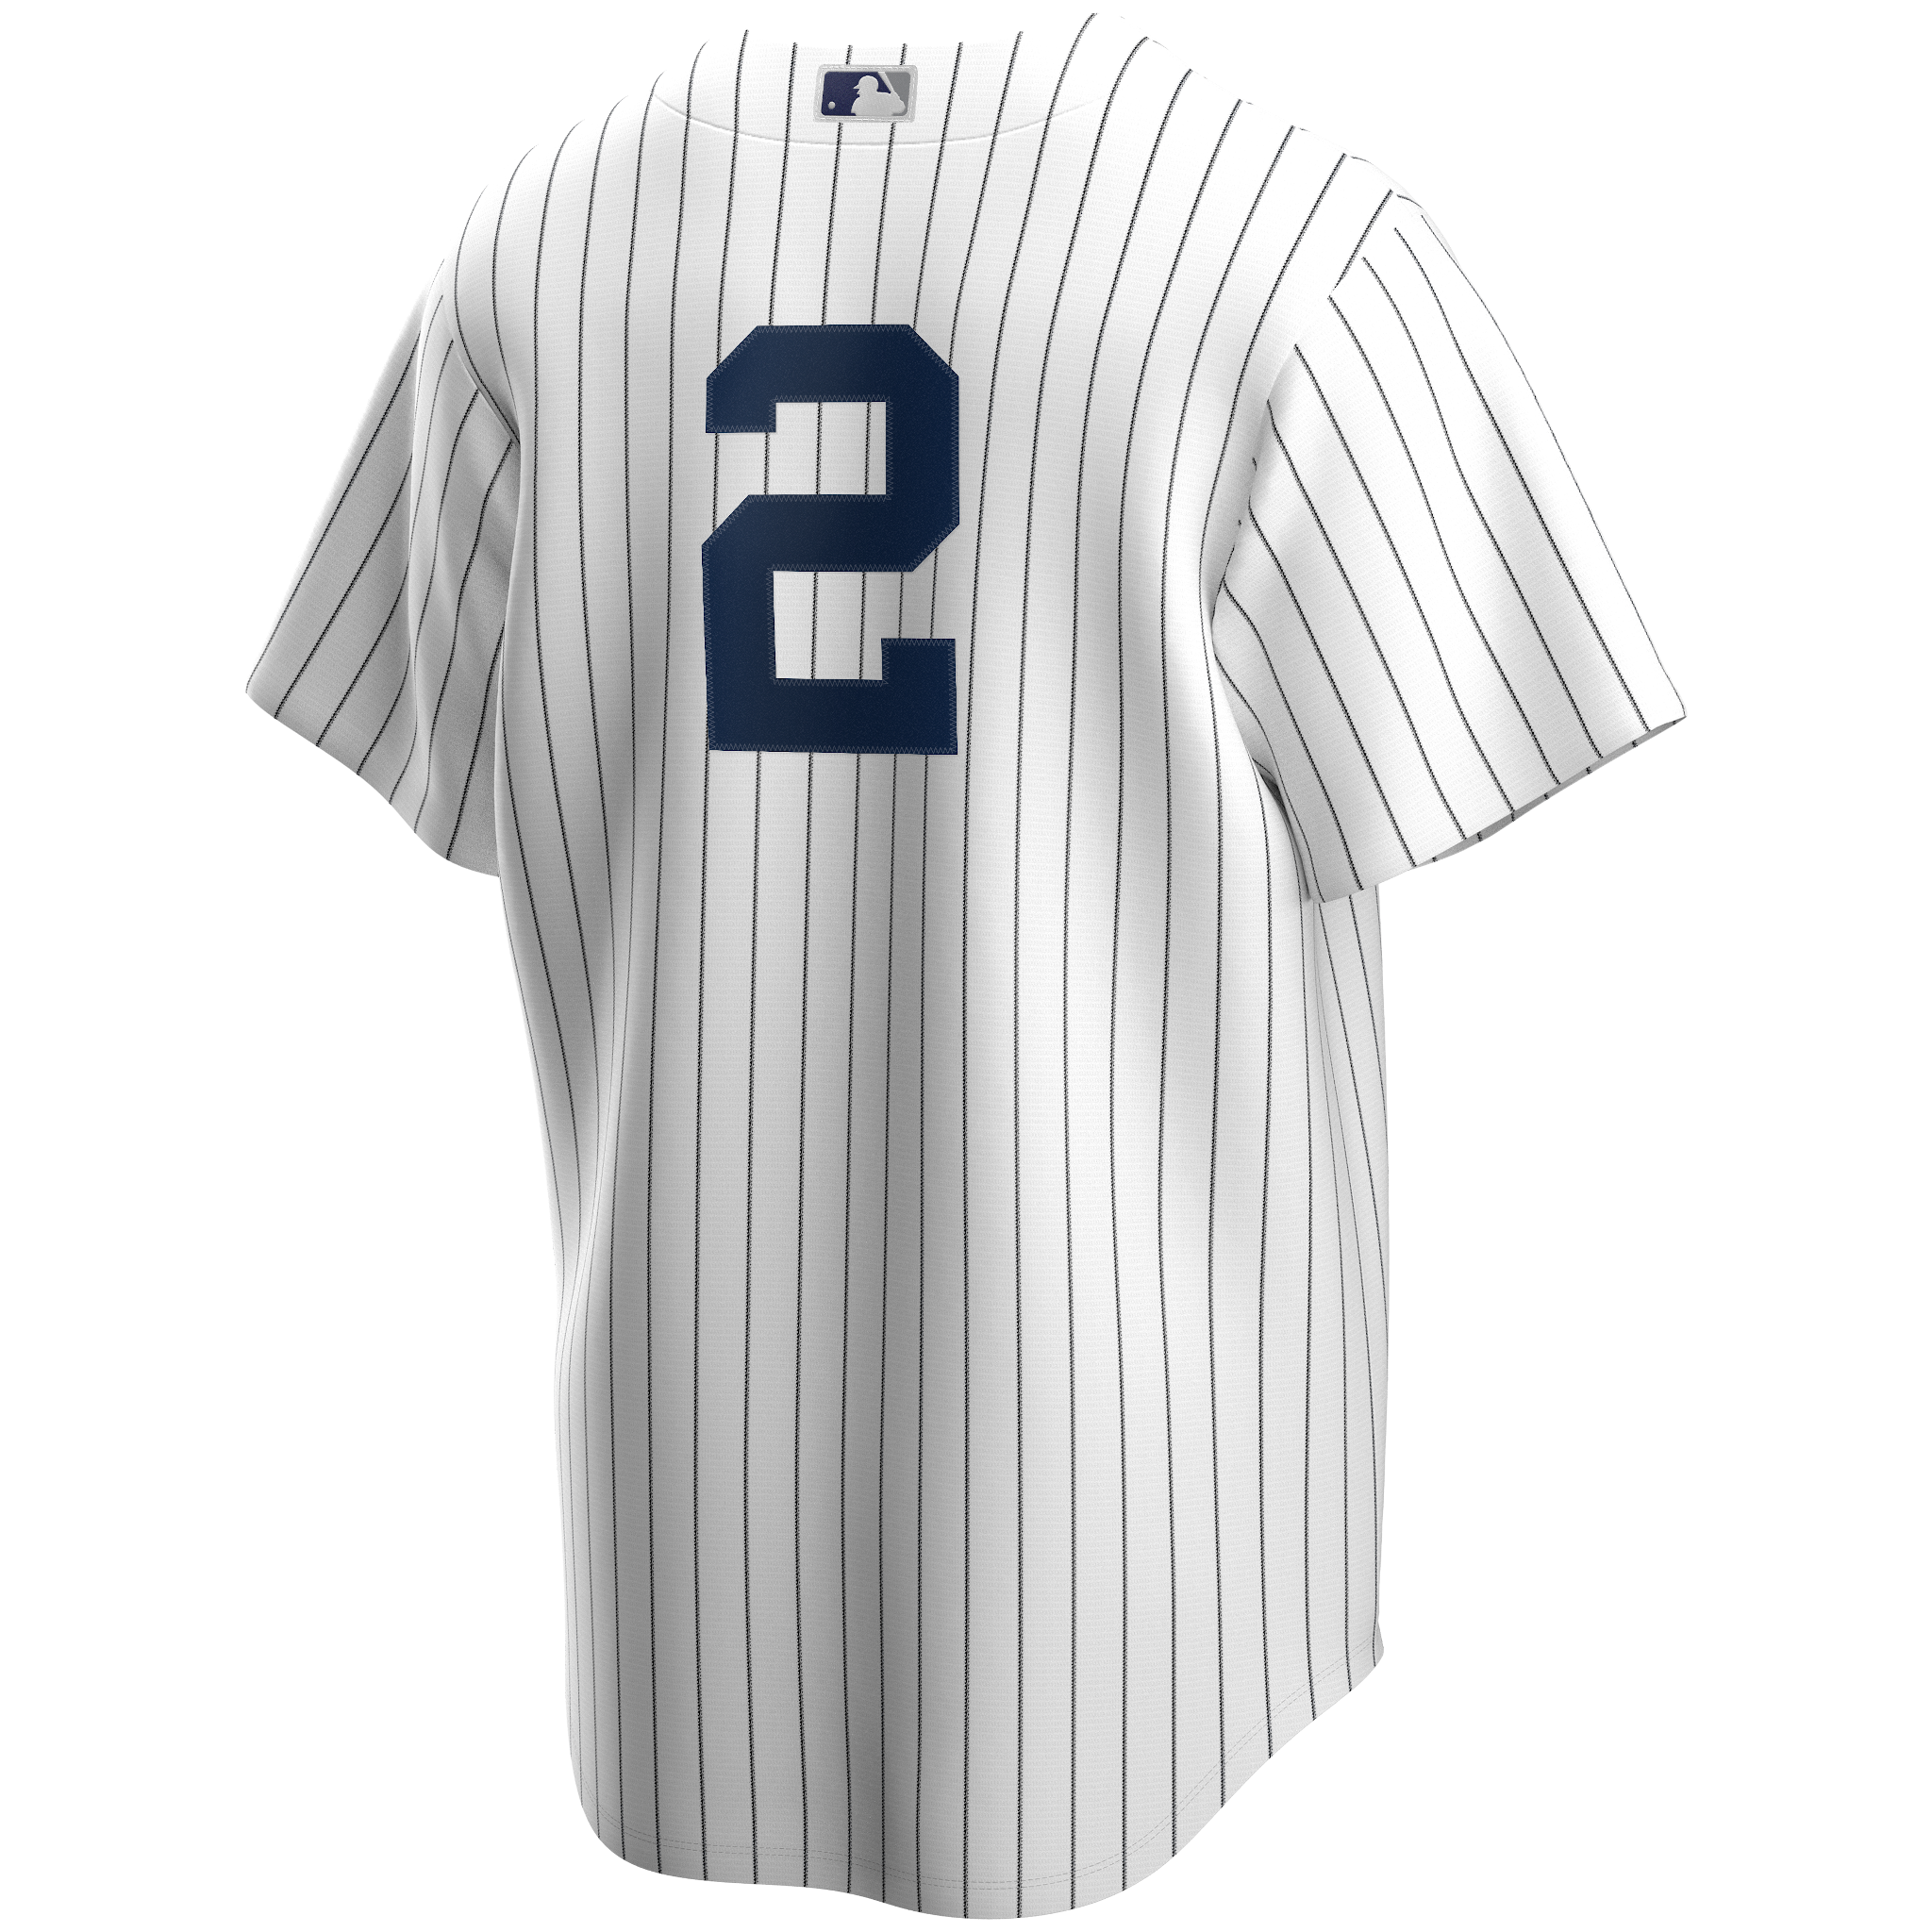 1999 Yankees Derek Jeter Jersey size 52 – Mr. Throwback NYC